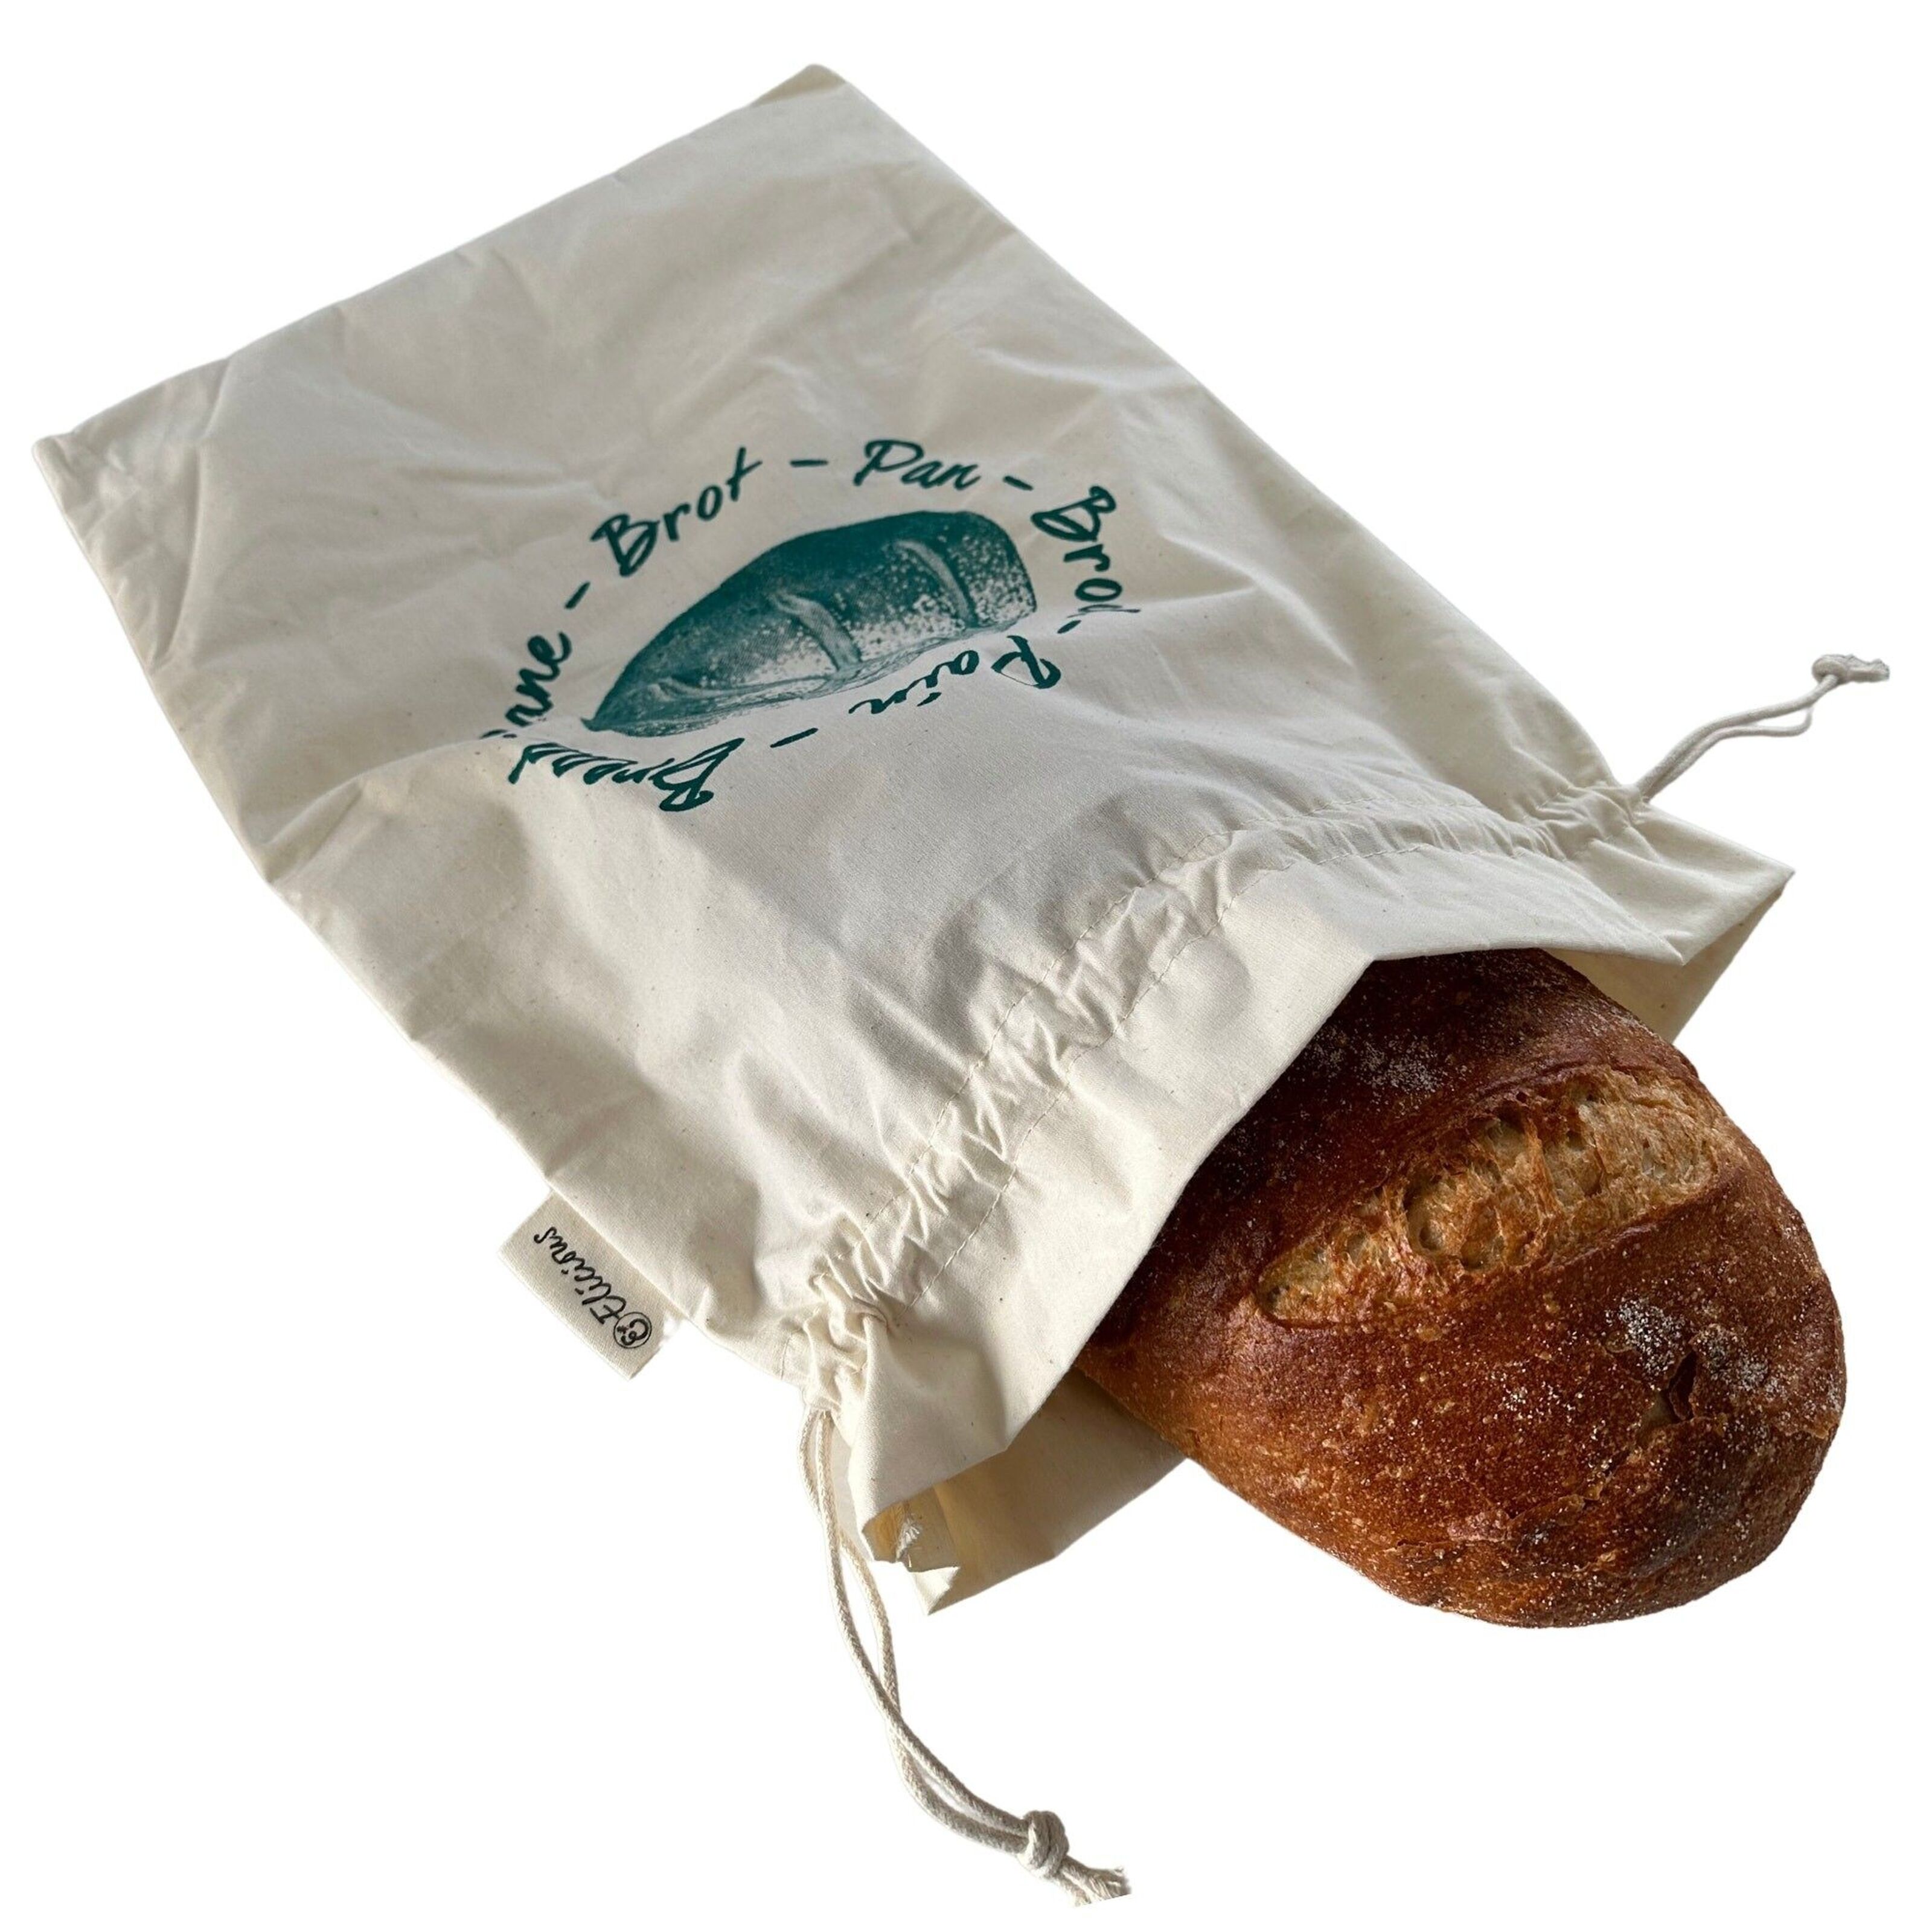 Reusable Linen Bread Bags - 100% Linen Washable - Combo Set of 2